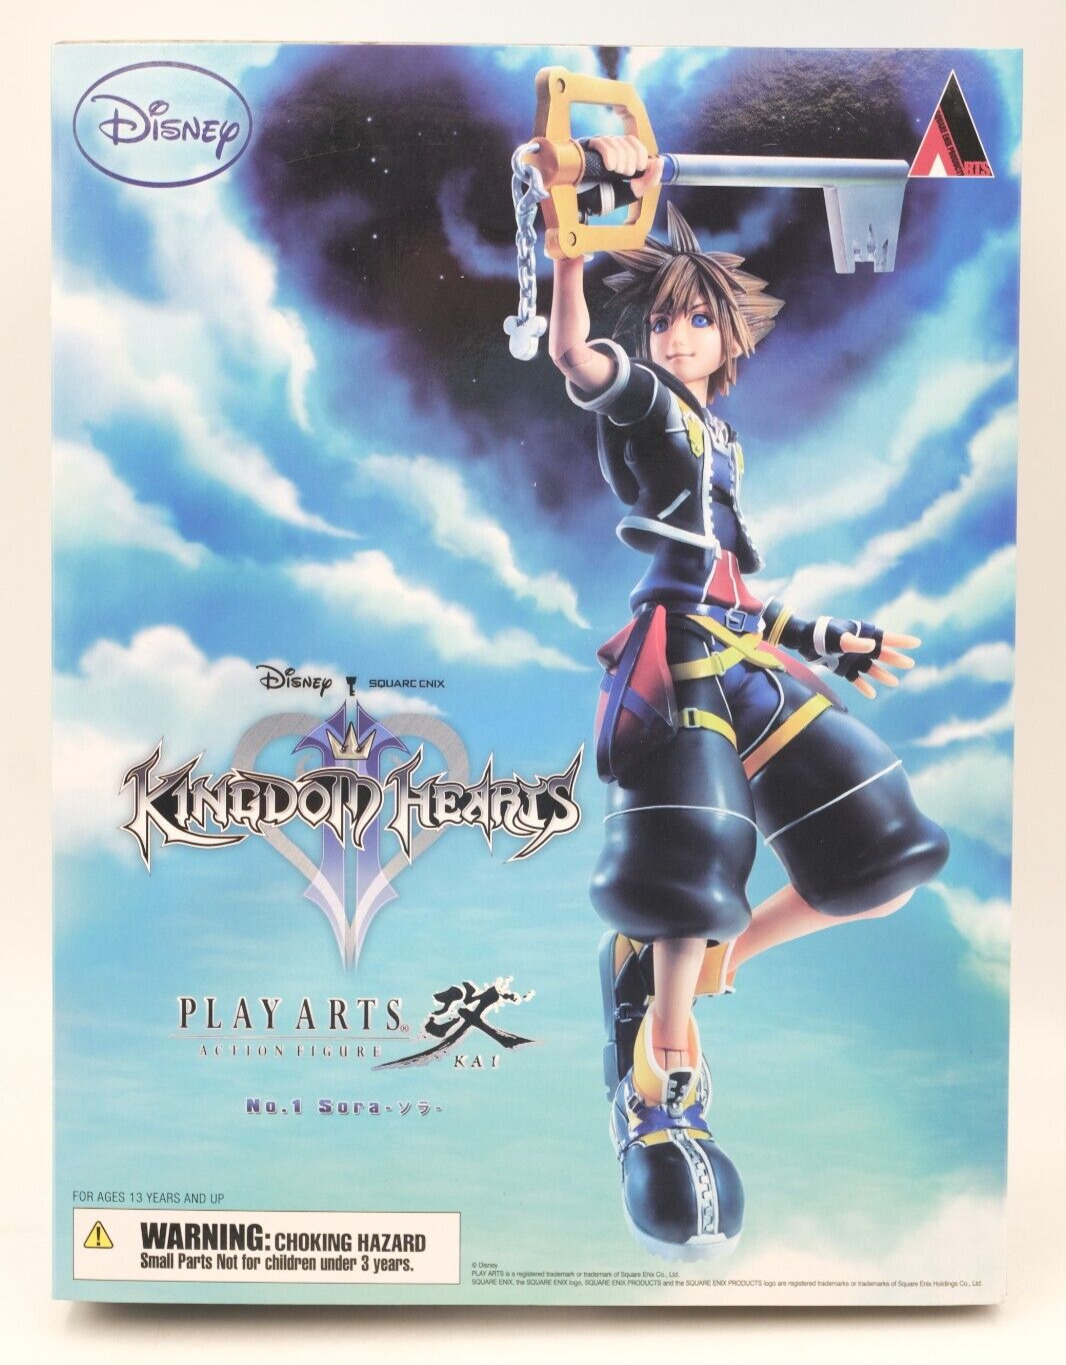 Play Arts Kai Kingdom Hearts II Sora No. 1 Action Figure Square Enix